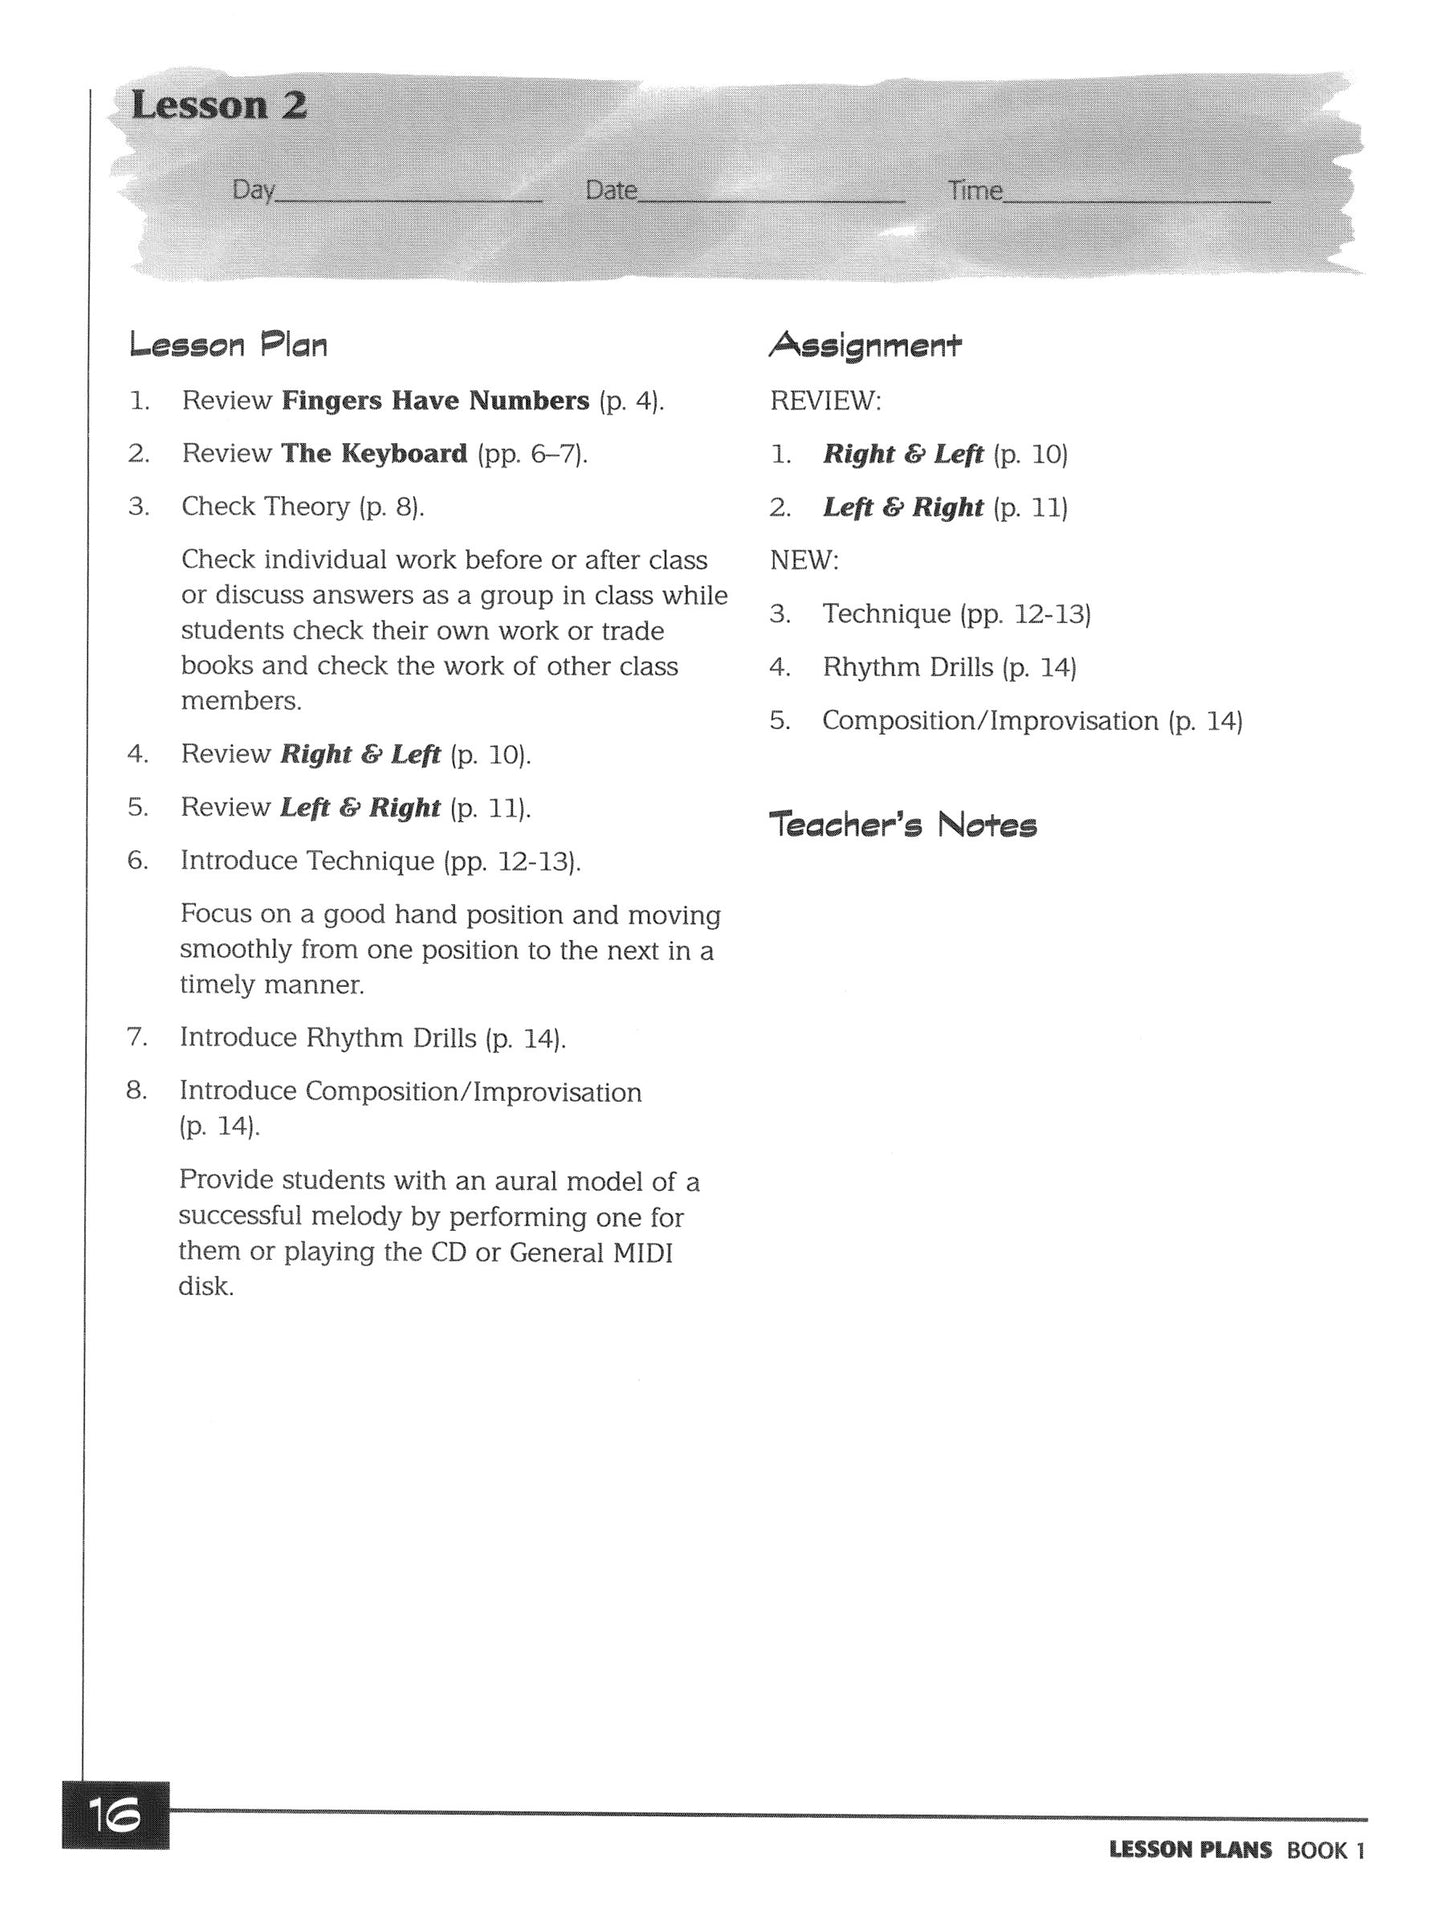 Alfred's Basic Group Piano Course - Teacher's Handbook 1 & 2